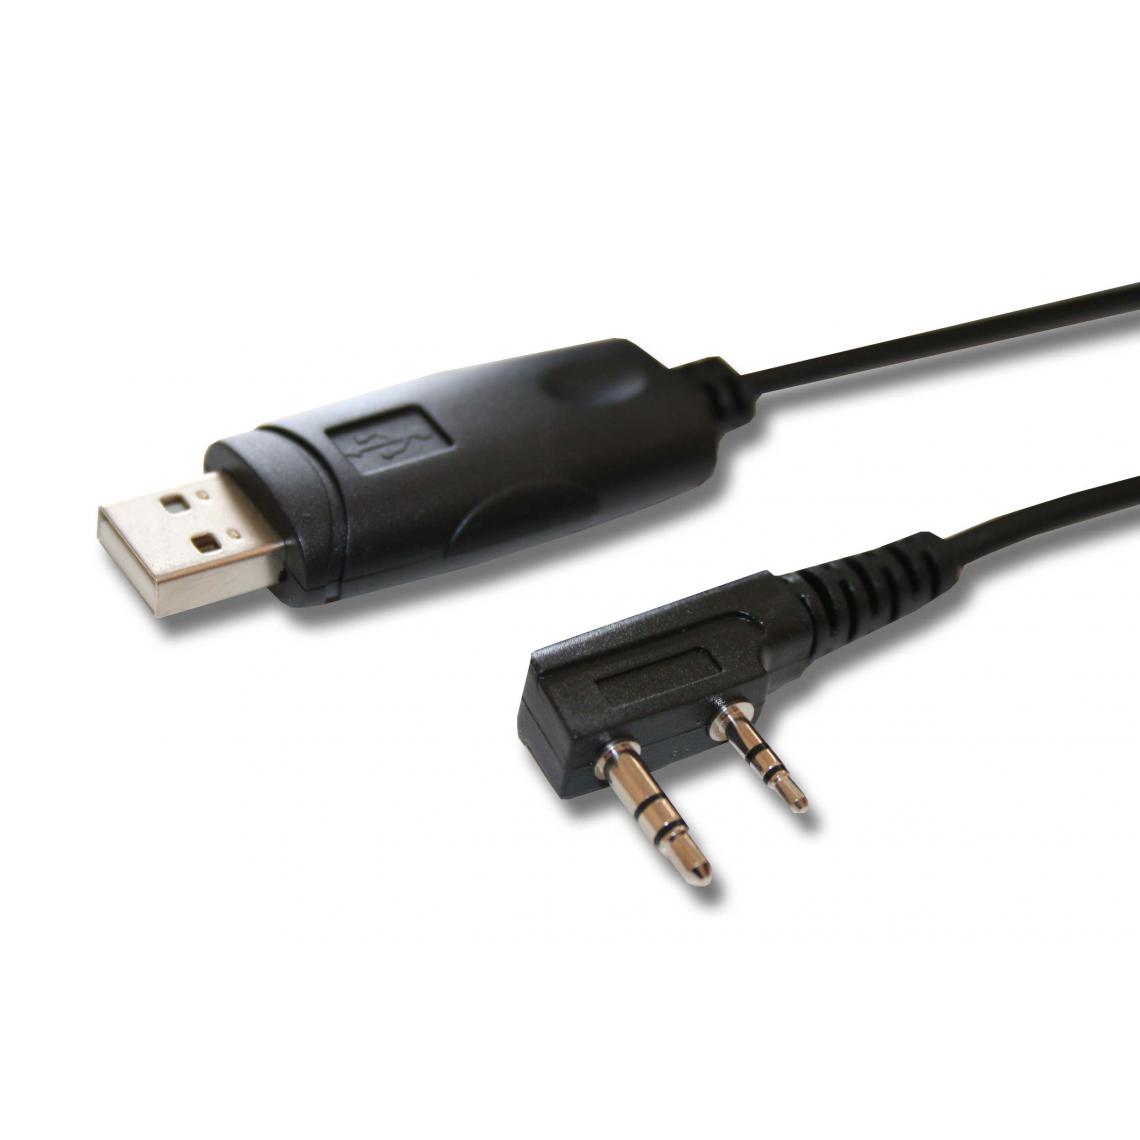 Vhbw - vhbw Câble USB de programmation compatible avec Kenwood TK-3131, TK-3160, TK-3170, TK-3170K, TK-3173, TK-320, TK-3200, TK-3200L appareils radio noir - Accessoires alimentation